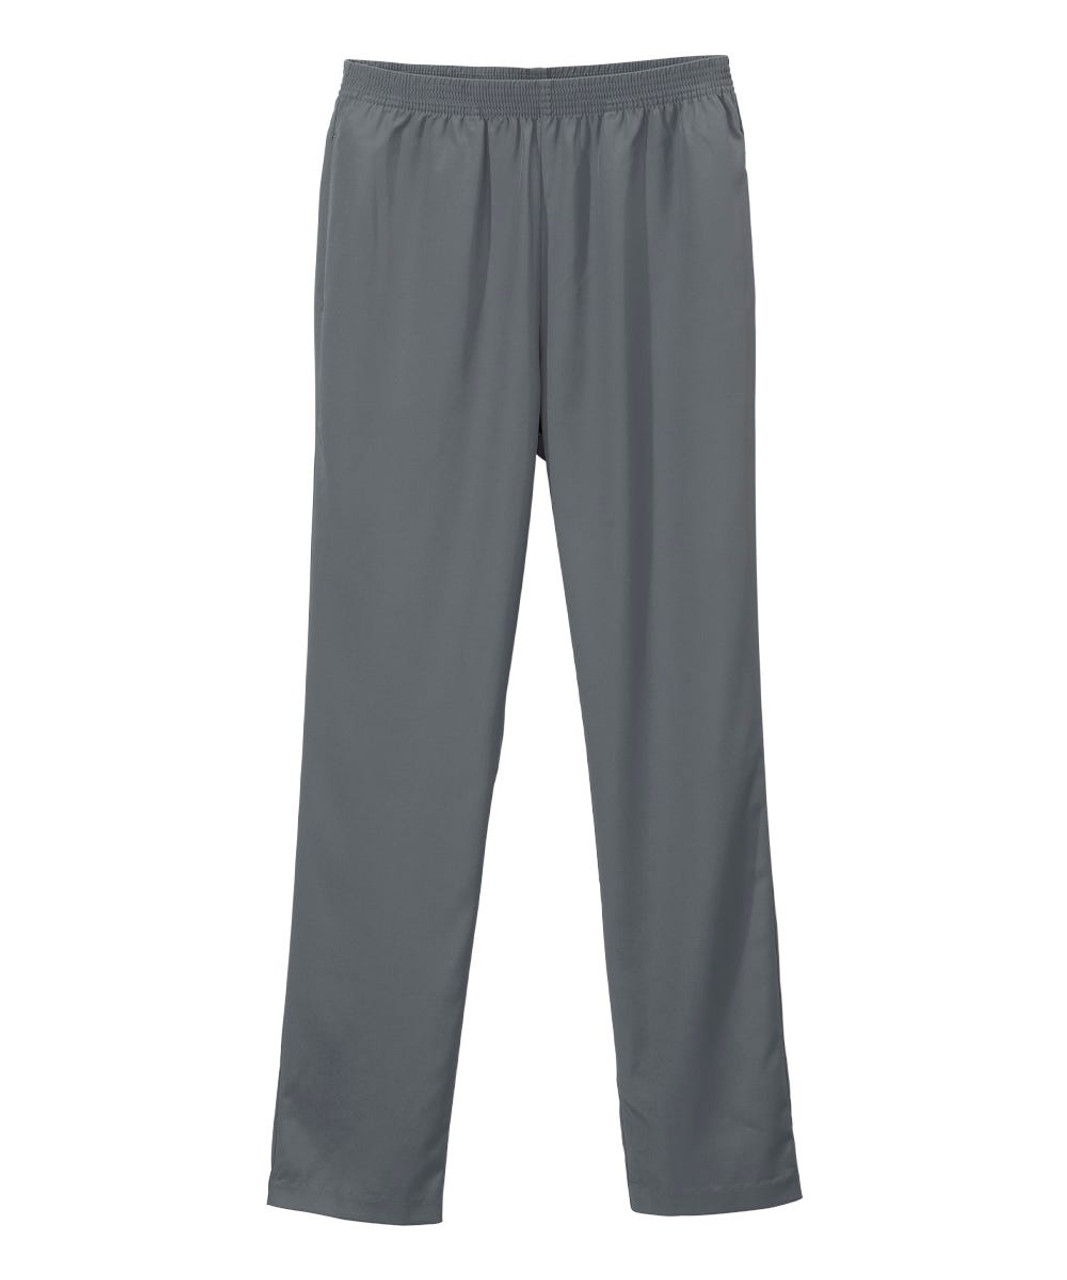 Silverts SV13090 Senior Women's Pull-on Gabardine Pant - Elastic Waist Pants for Women Condor Grey, Size=40, SV13090-CGW-40